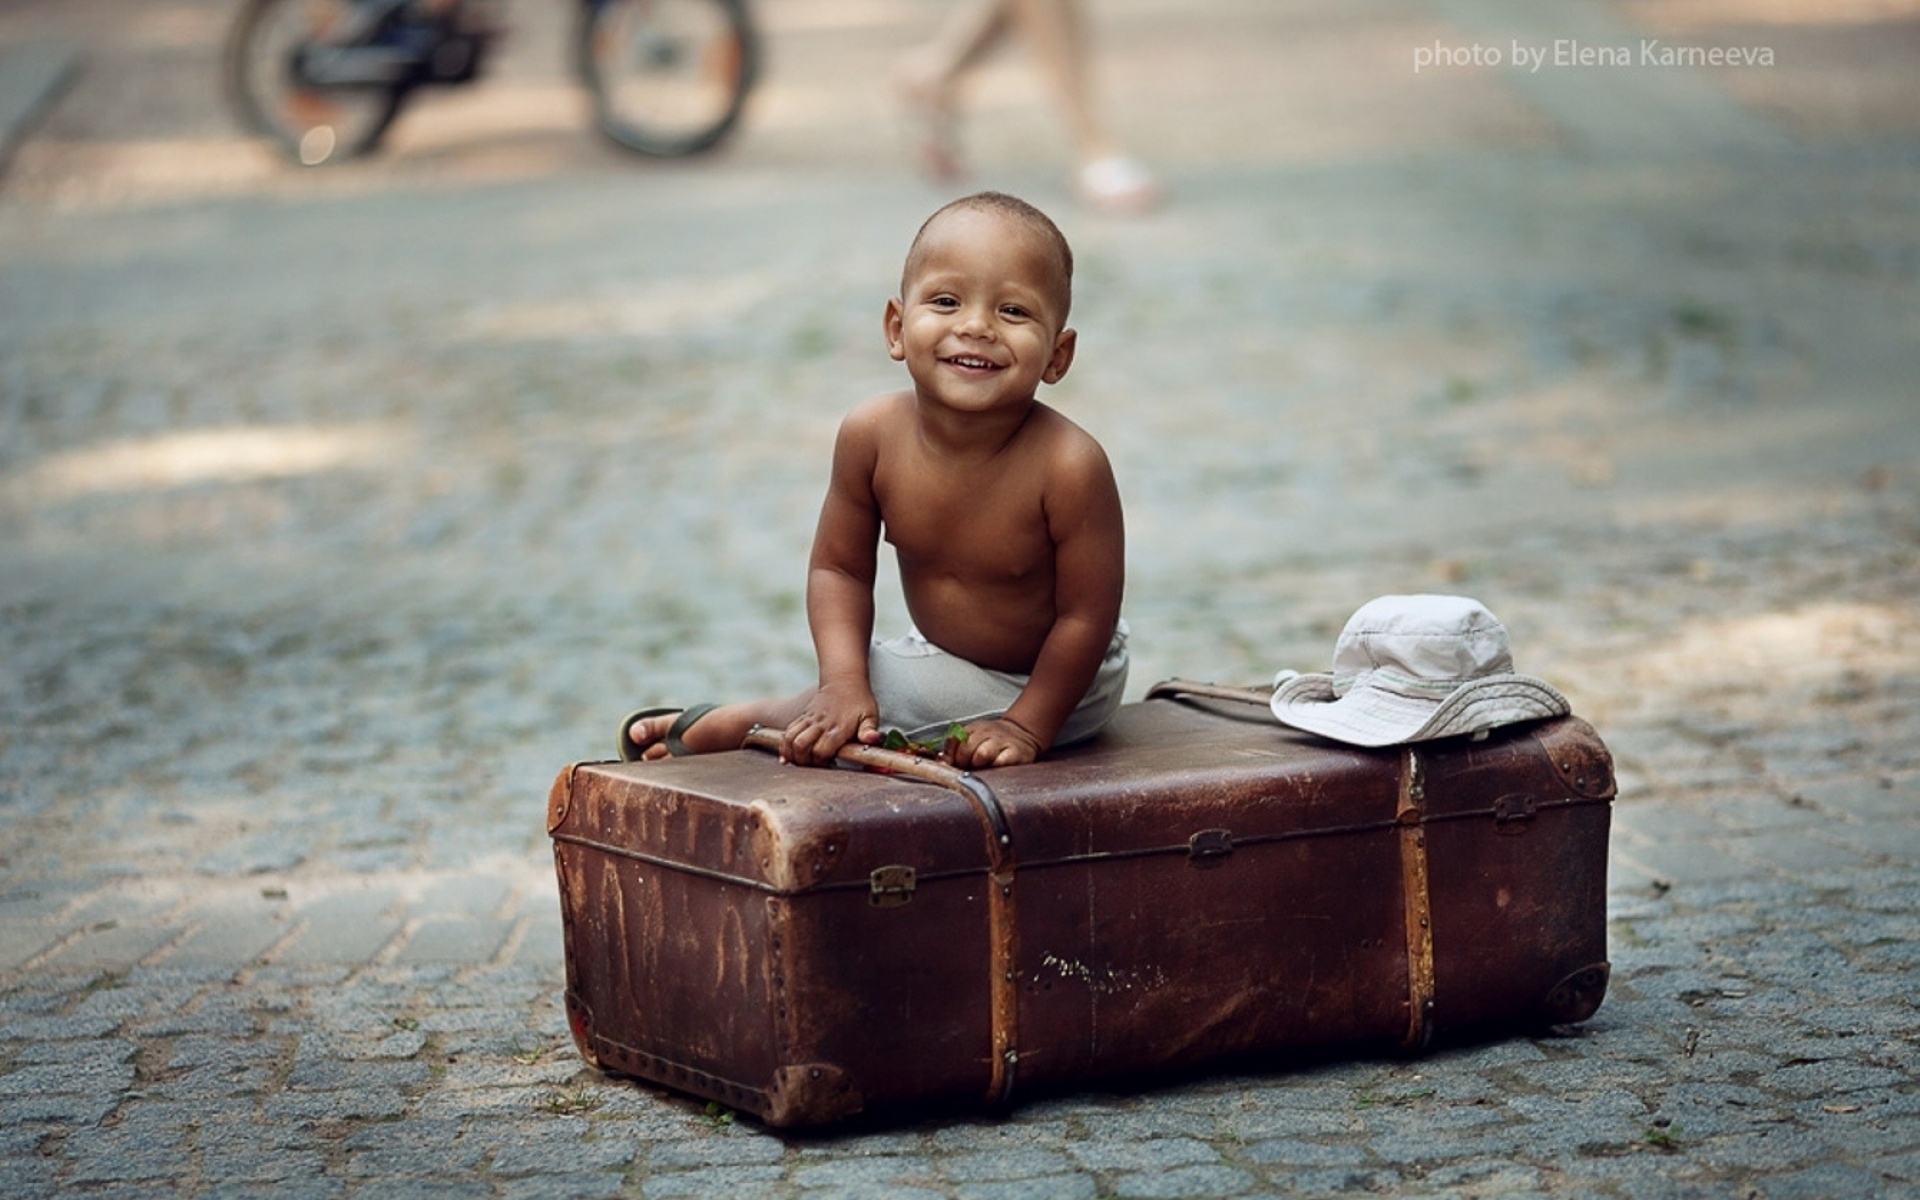 Картинки Ребенок, чемодан, шляпа, улыбка, улица, город фото и обои на рабочий стол